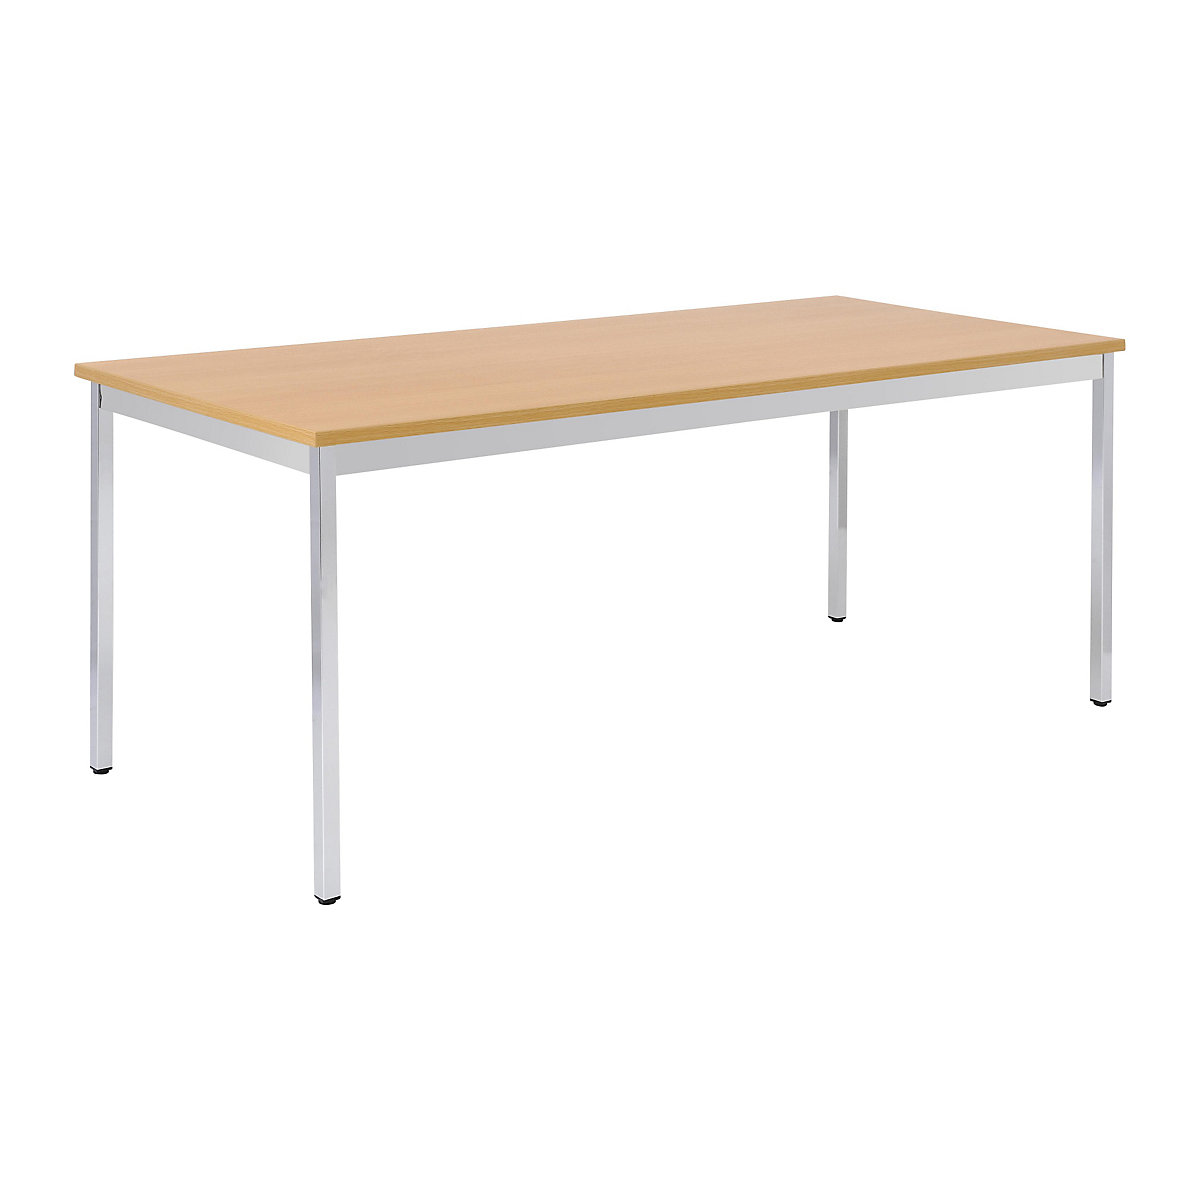 Universele tafel – eurokraft basic, rechthoekig, b x h = 1200 x 740 mm, diepte 800 mm, blad beukenhoutdecor, frame verchroomd